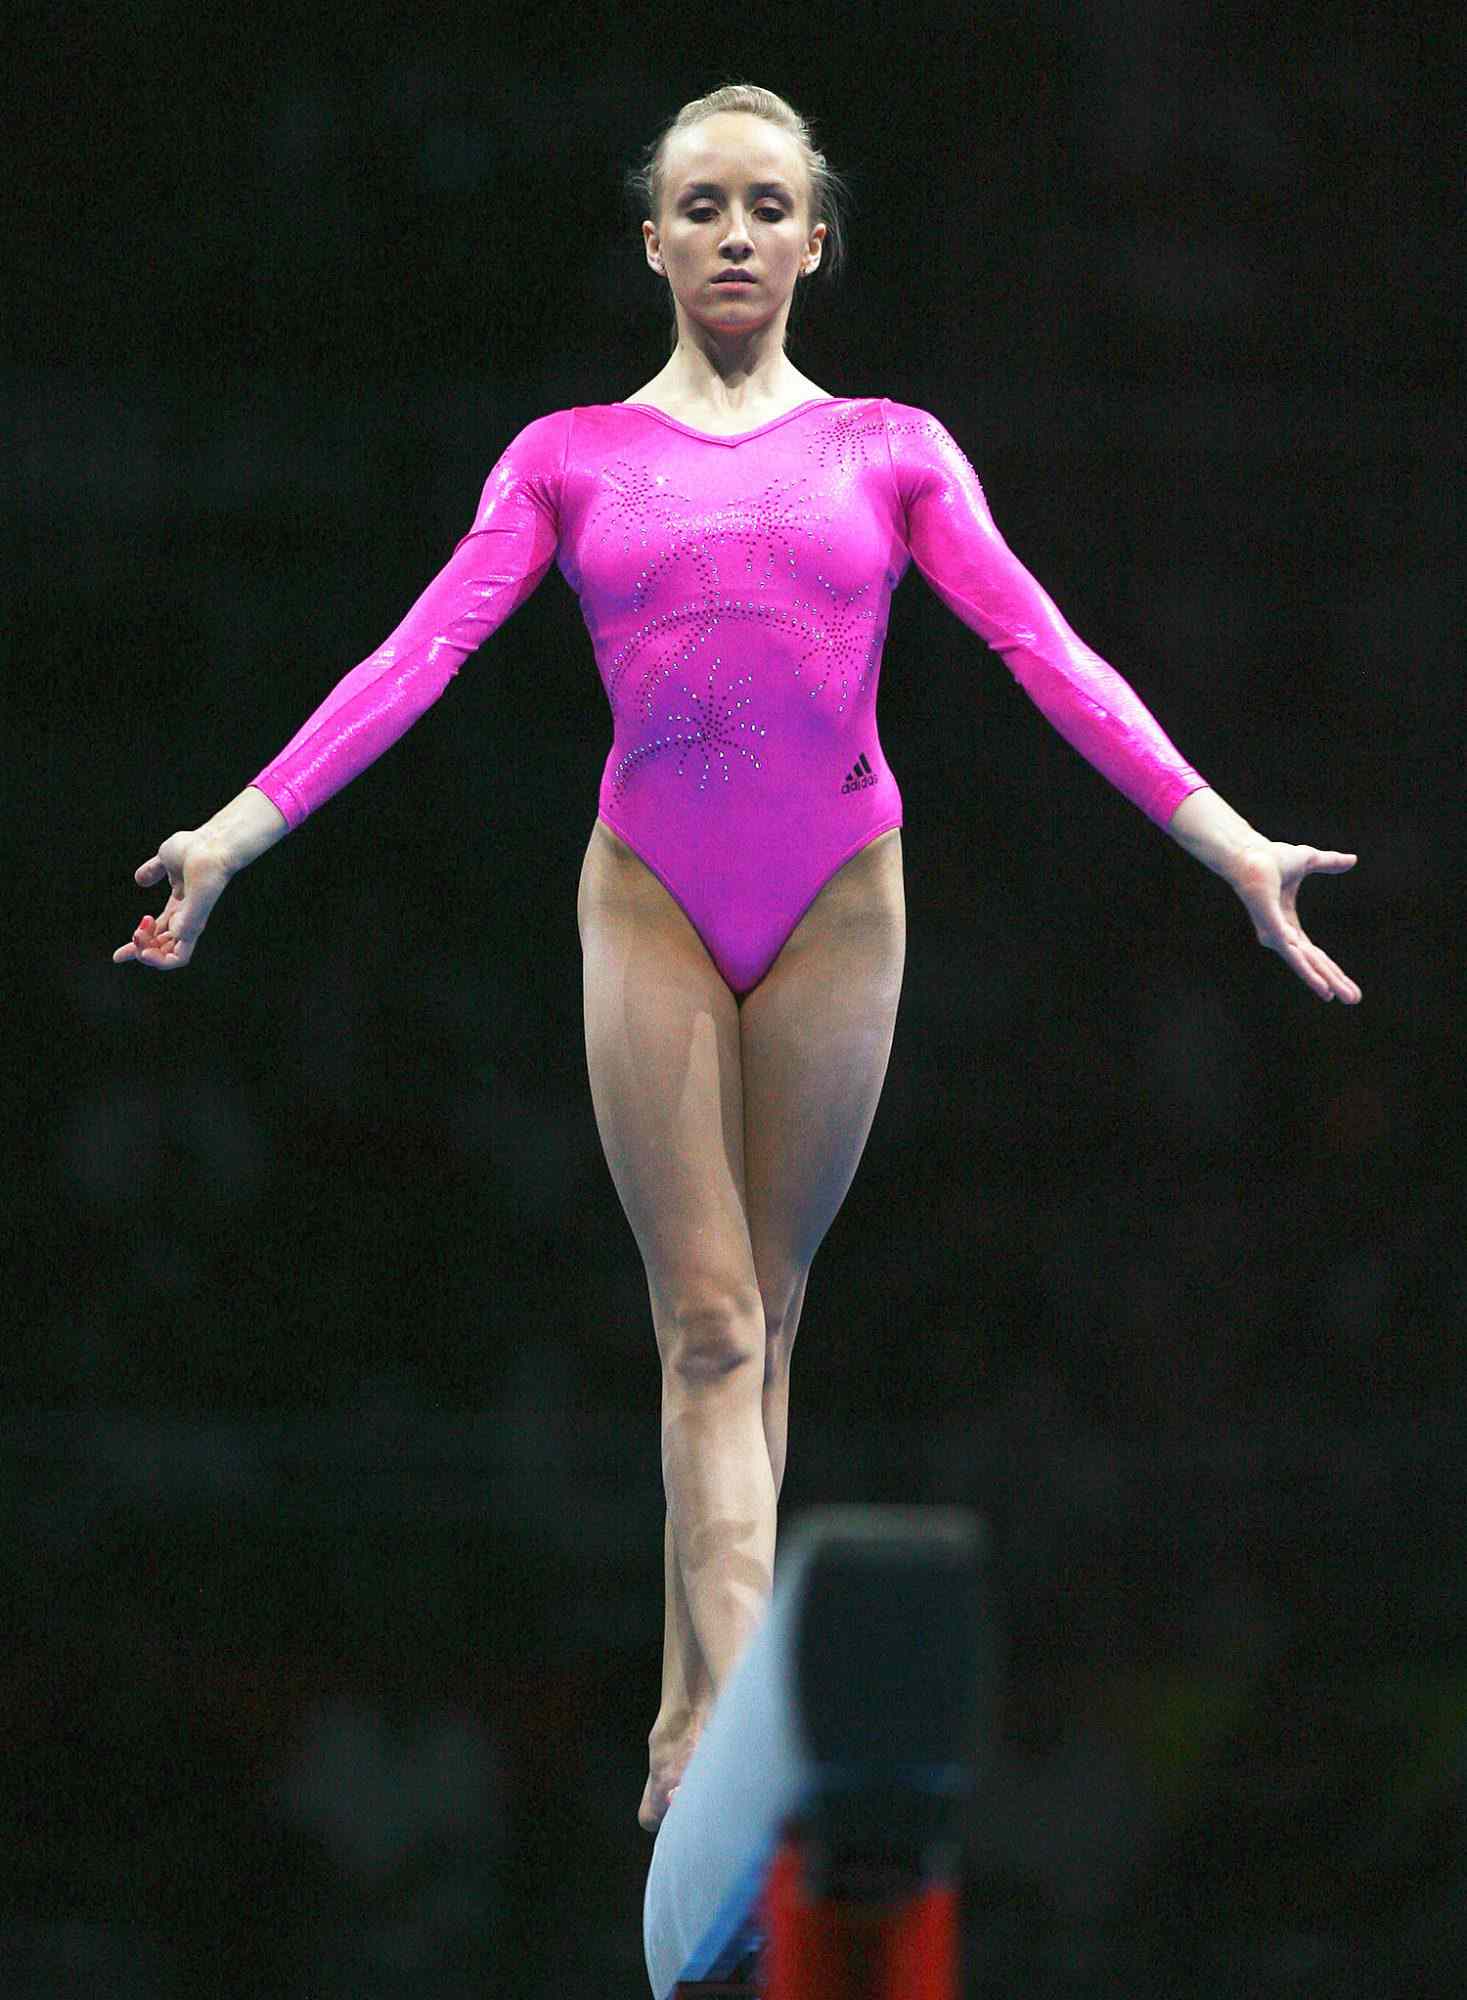 Olympics Day 12 - Gymnastics